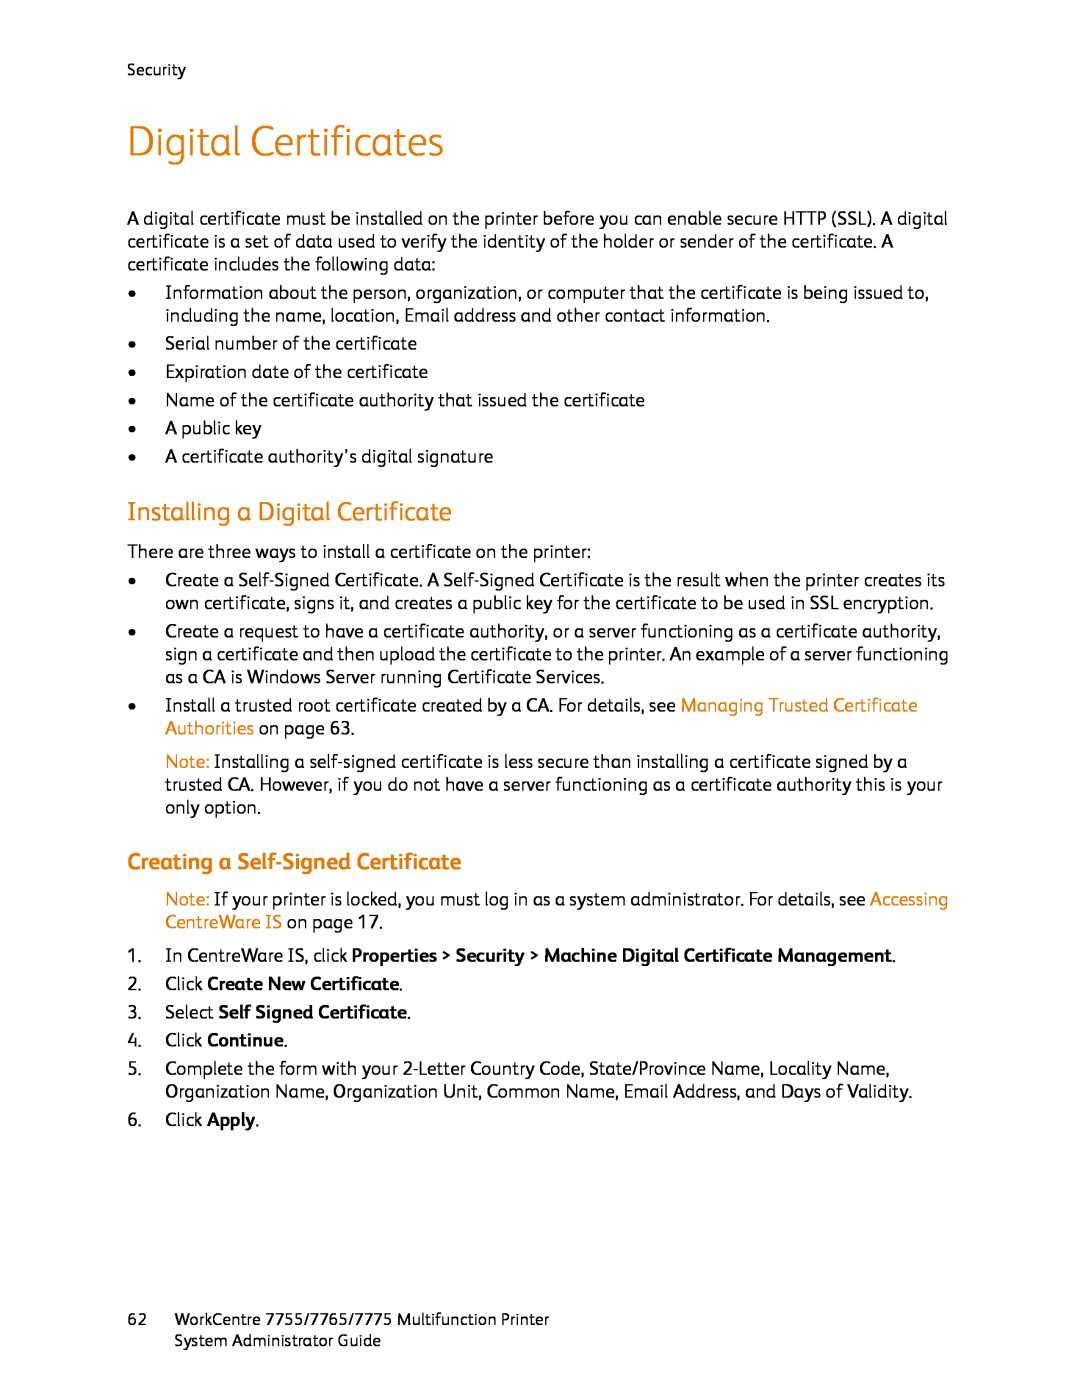 Xerox 7775, 7765, 7755 manual Digital Certificates, Installing a Digital Certificate 